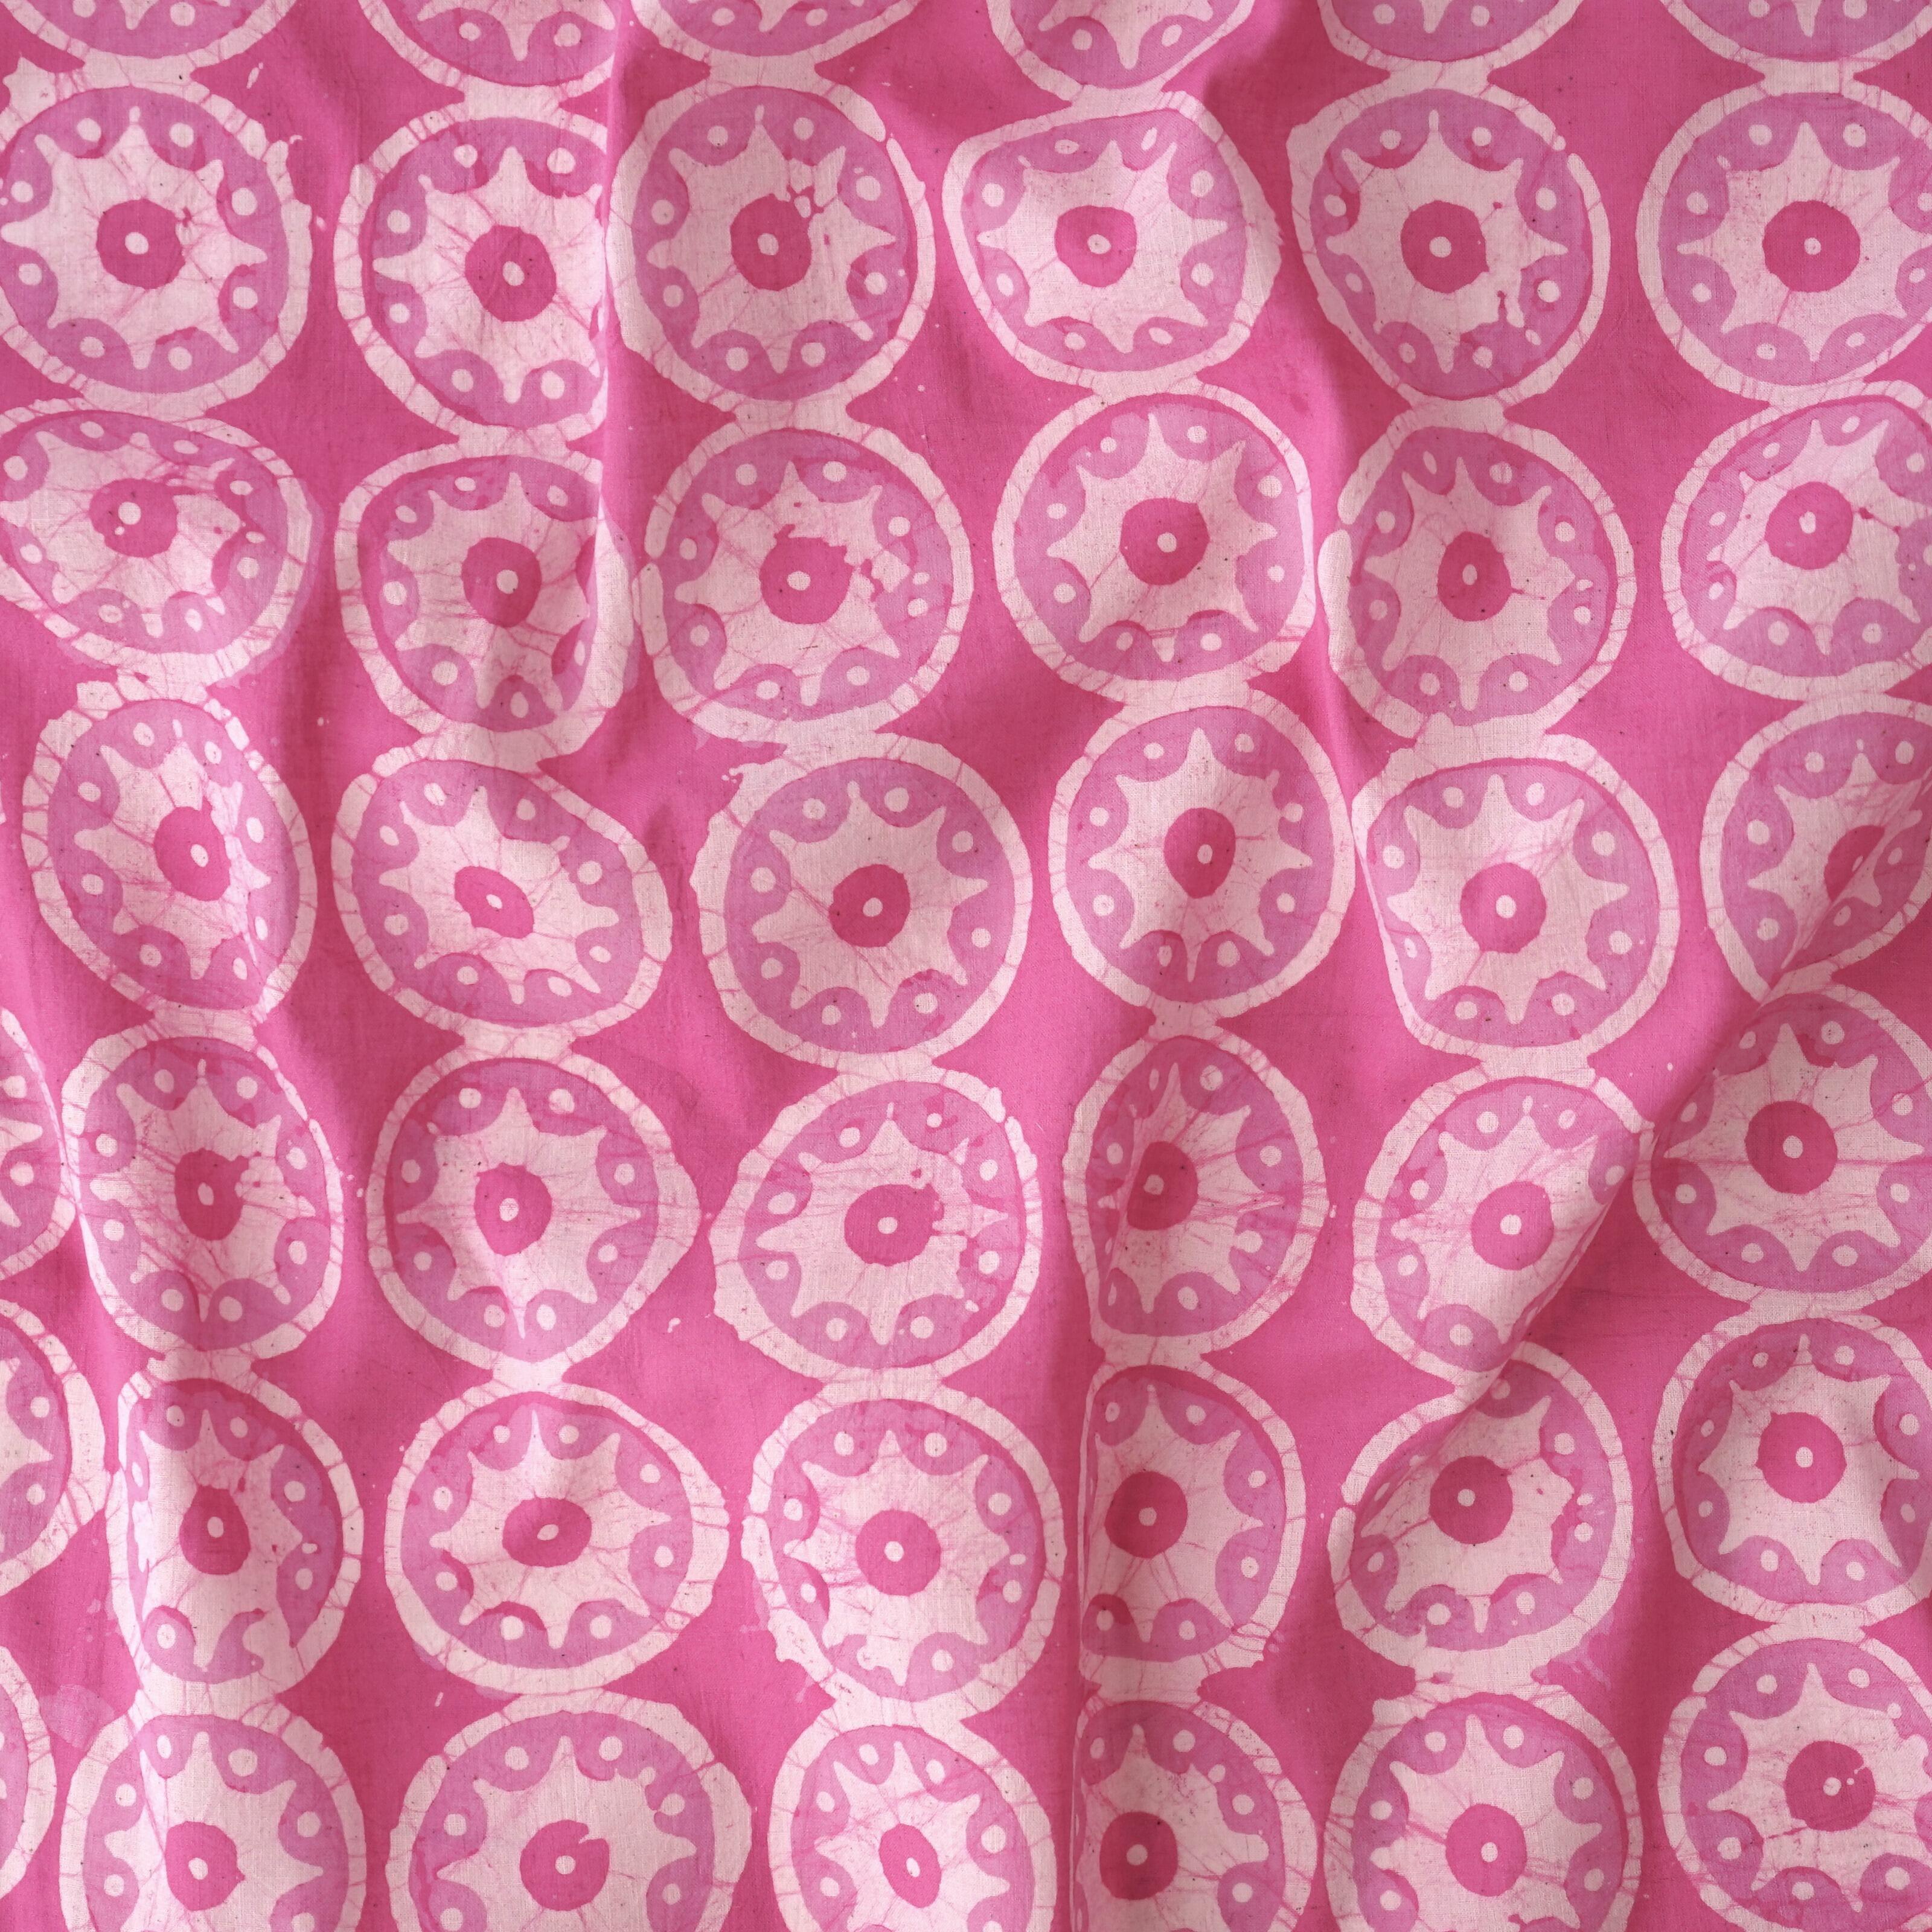 100% Block-Printed Batik Cotton Fabric From India - Pink Reactive Dye - Lollipop - Contrast